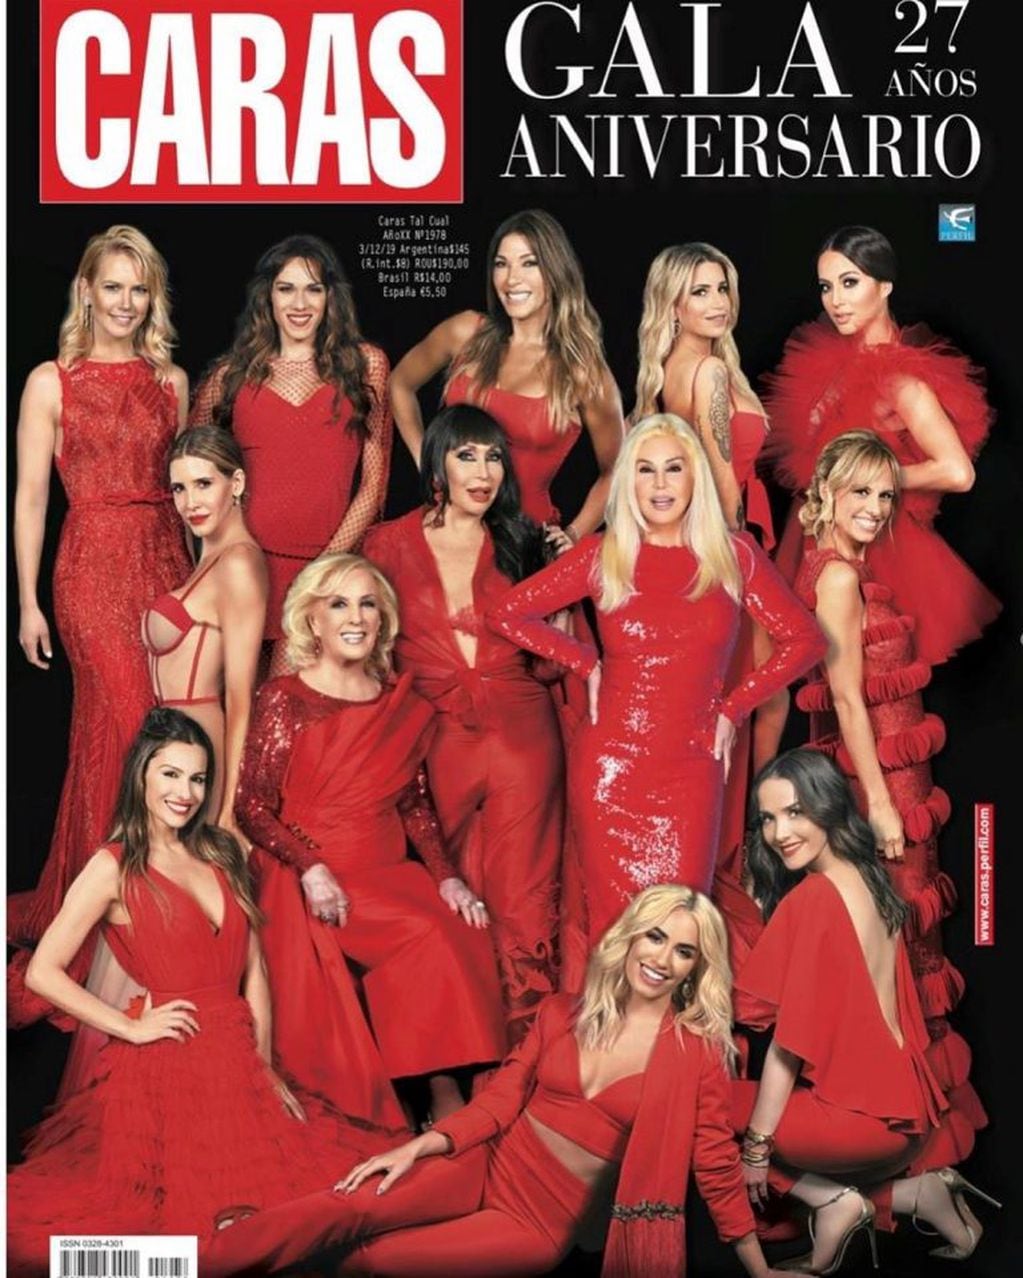 Susana Giménez formó parte de la portada de la revista Caras Aniversario junto a celebridades como Mirtha Legrand, Valeria Mazza, Pampita, Lali, Mariana Fabbiani, entre otras  (Foto: Instagram/ @gimenezsuok)